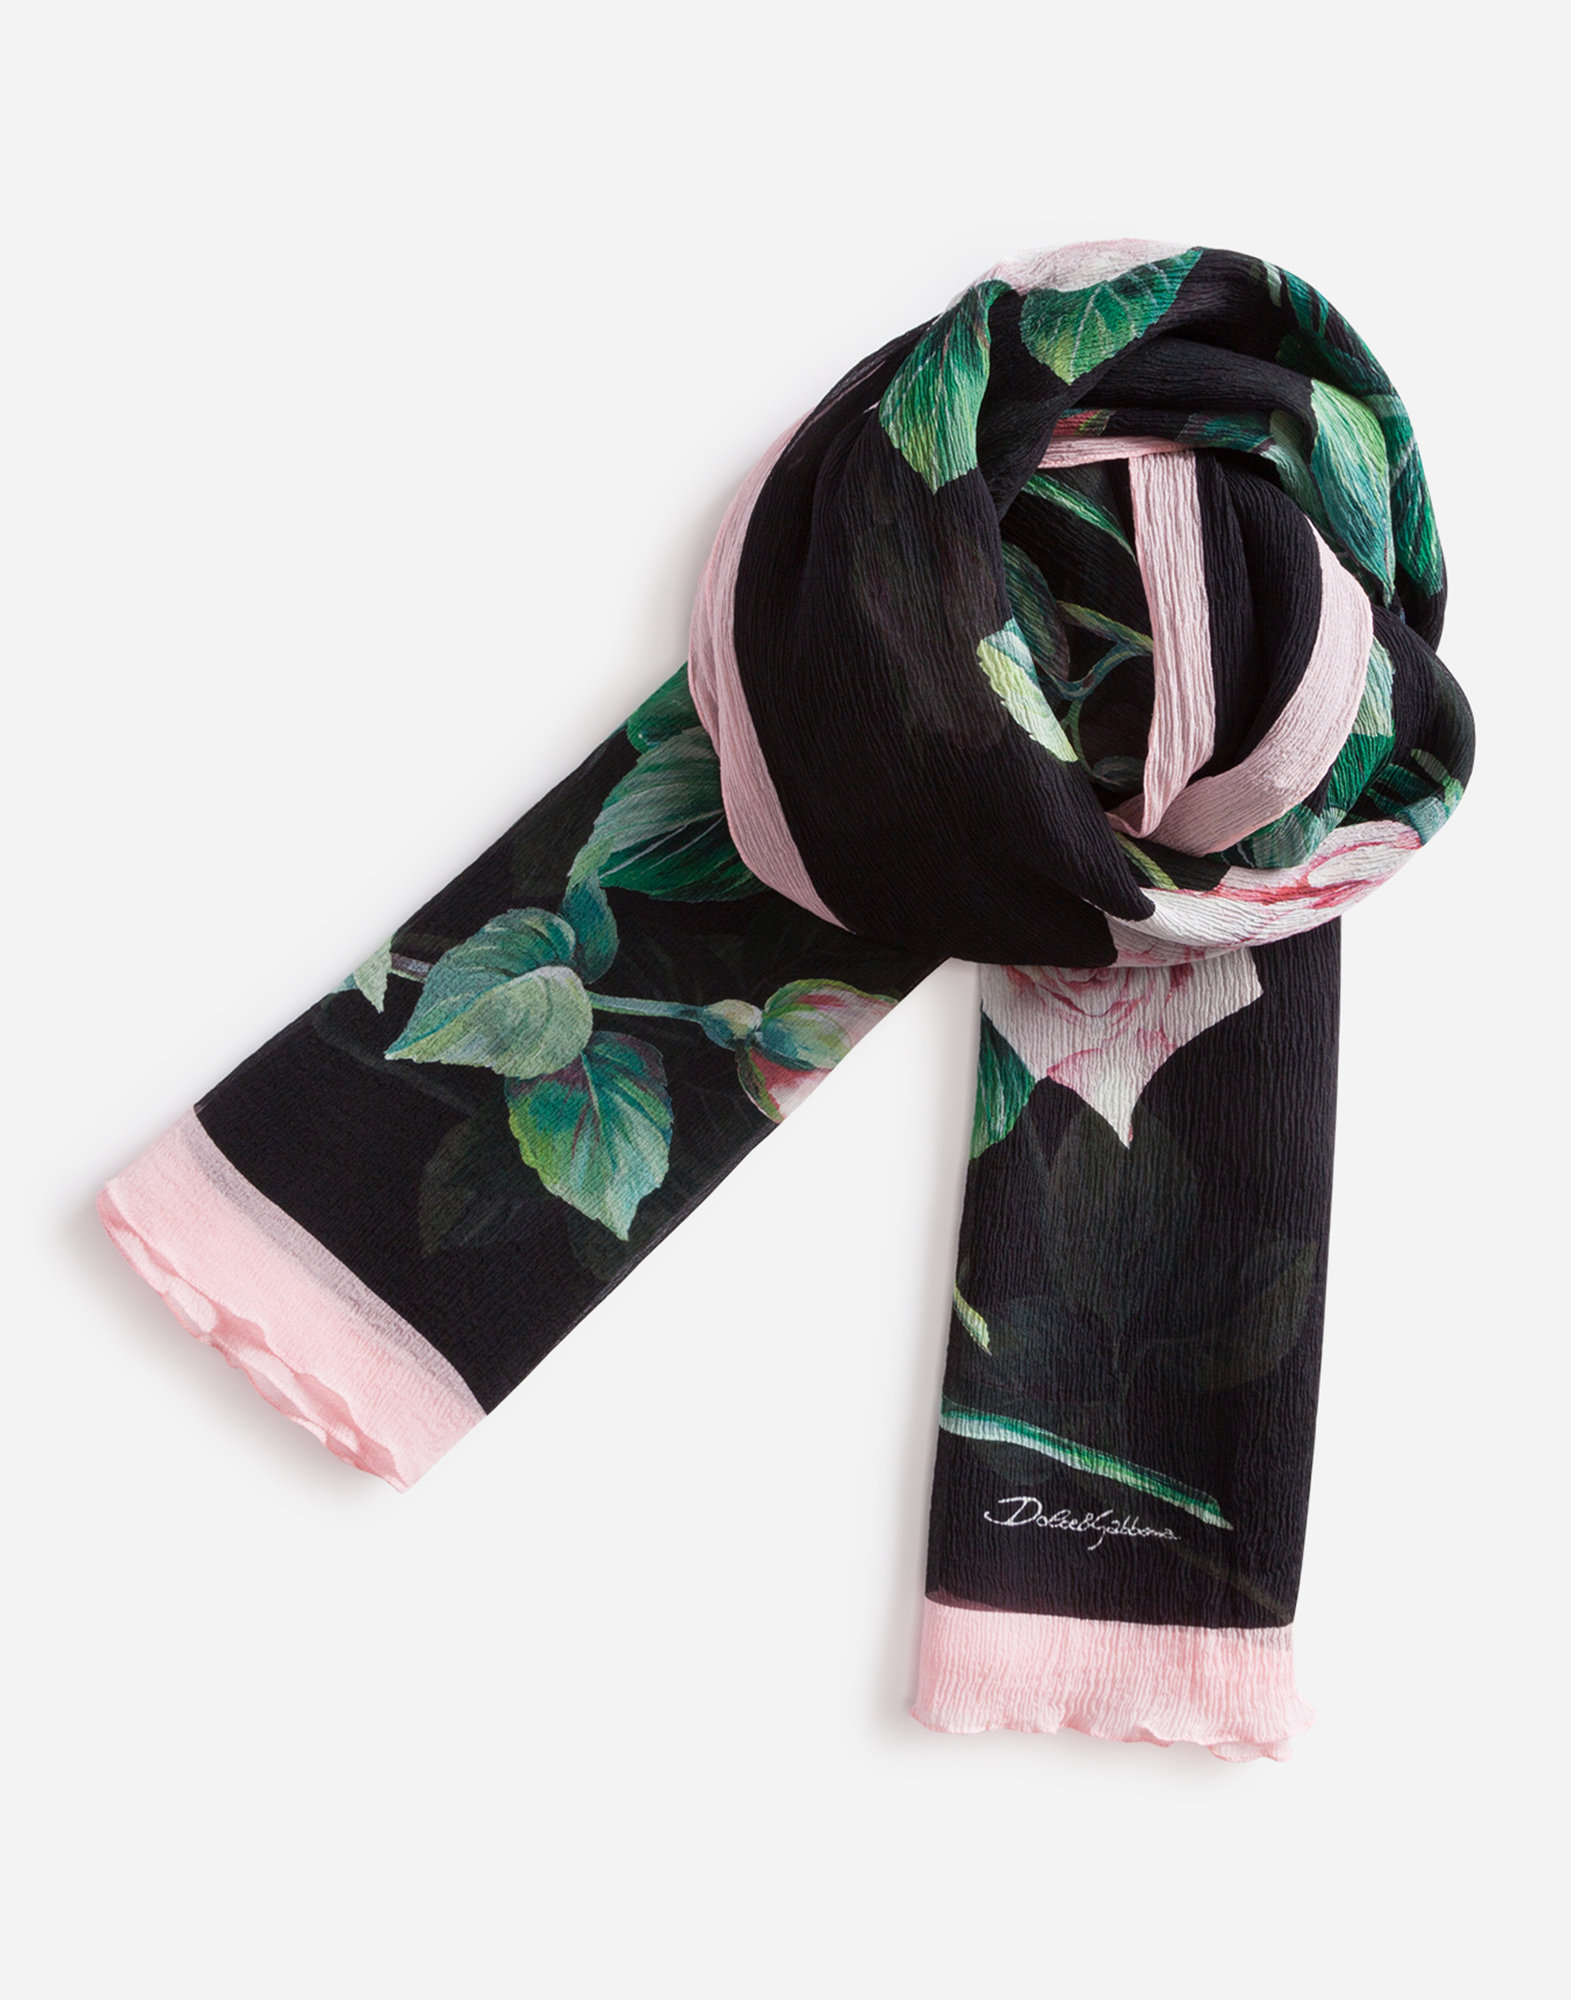 d&g silk scarf